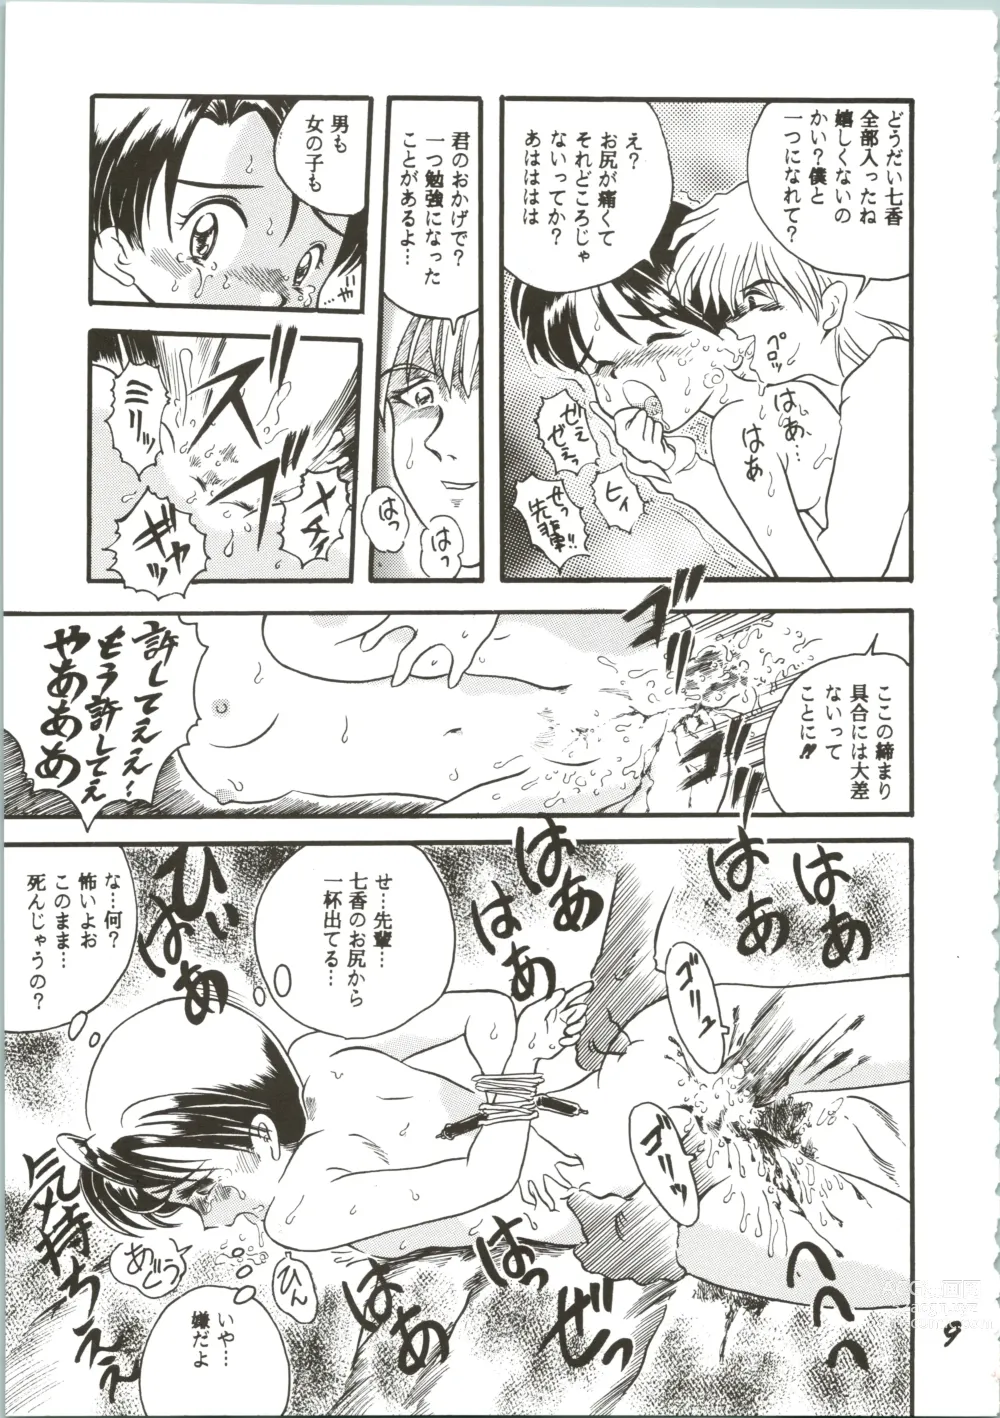 Page 9 of doujinshi OVA SPIRITS